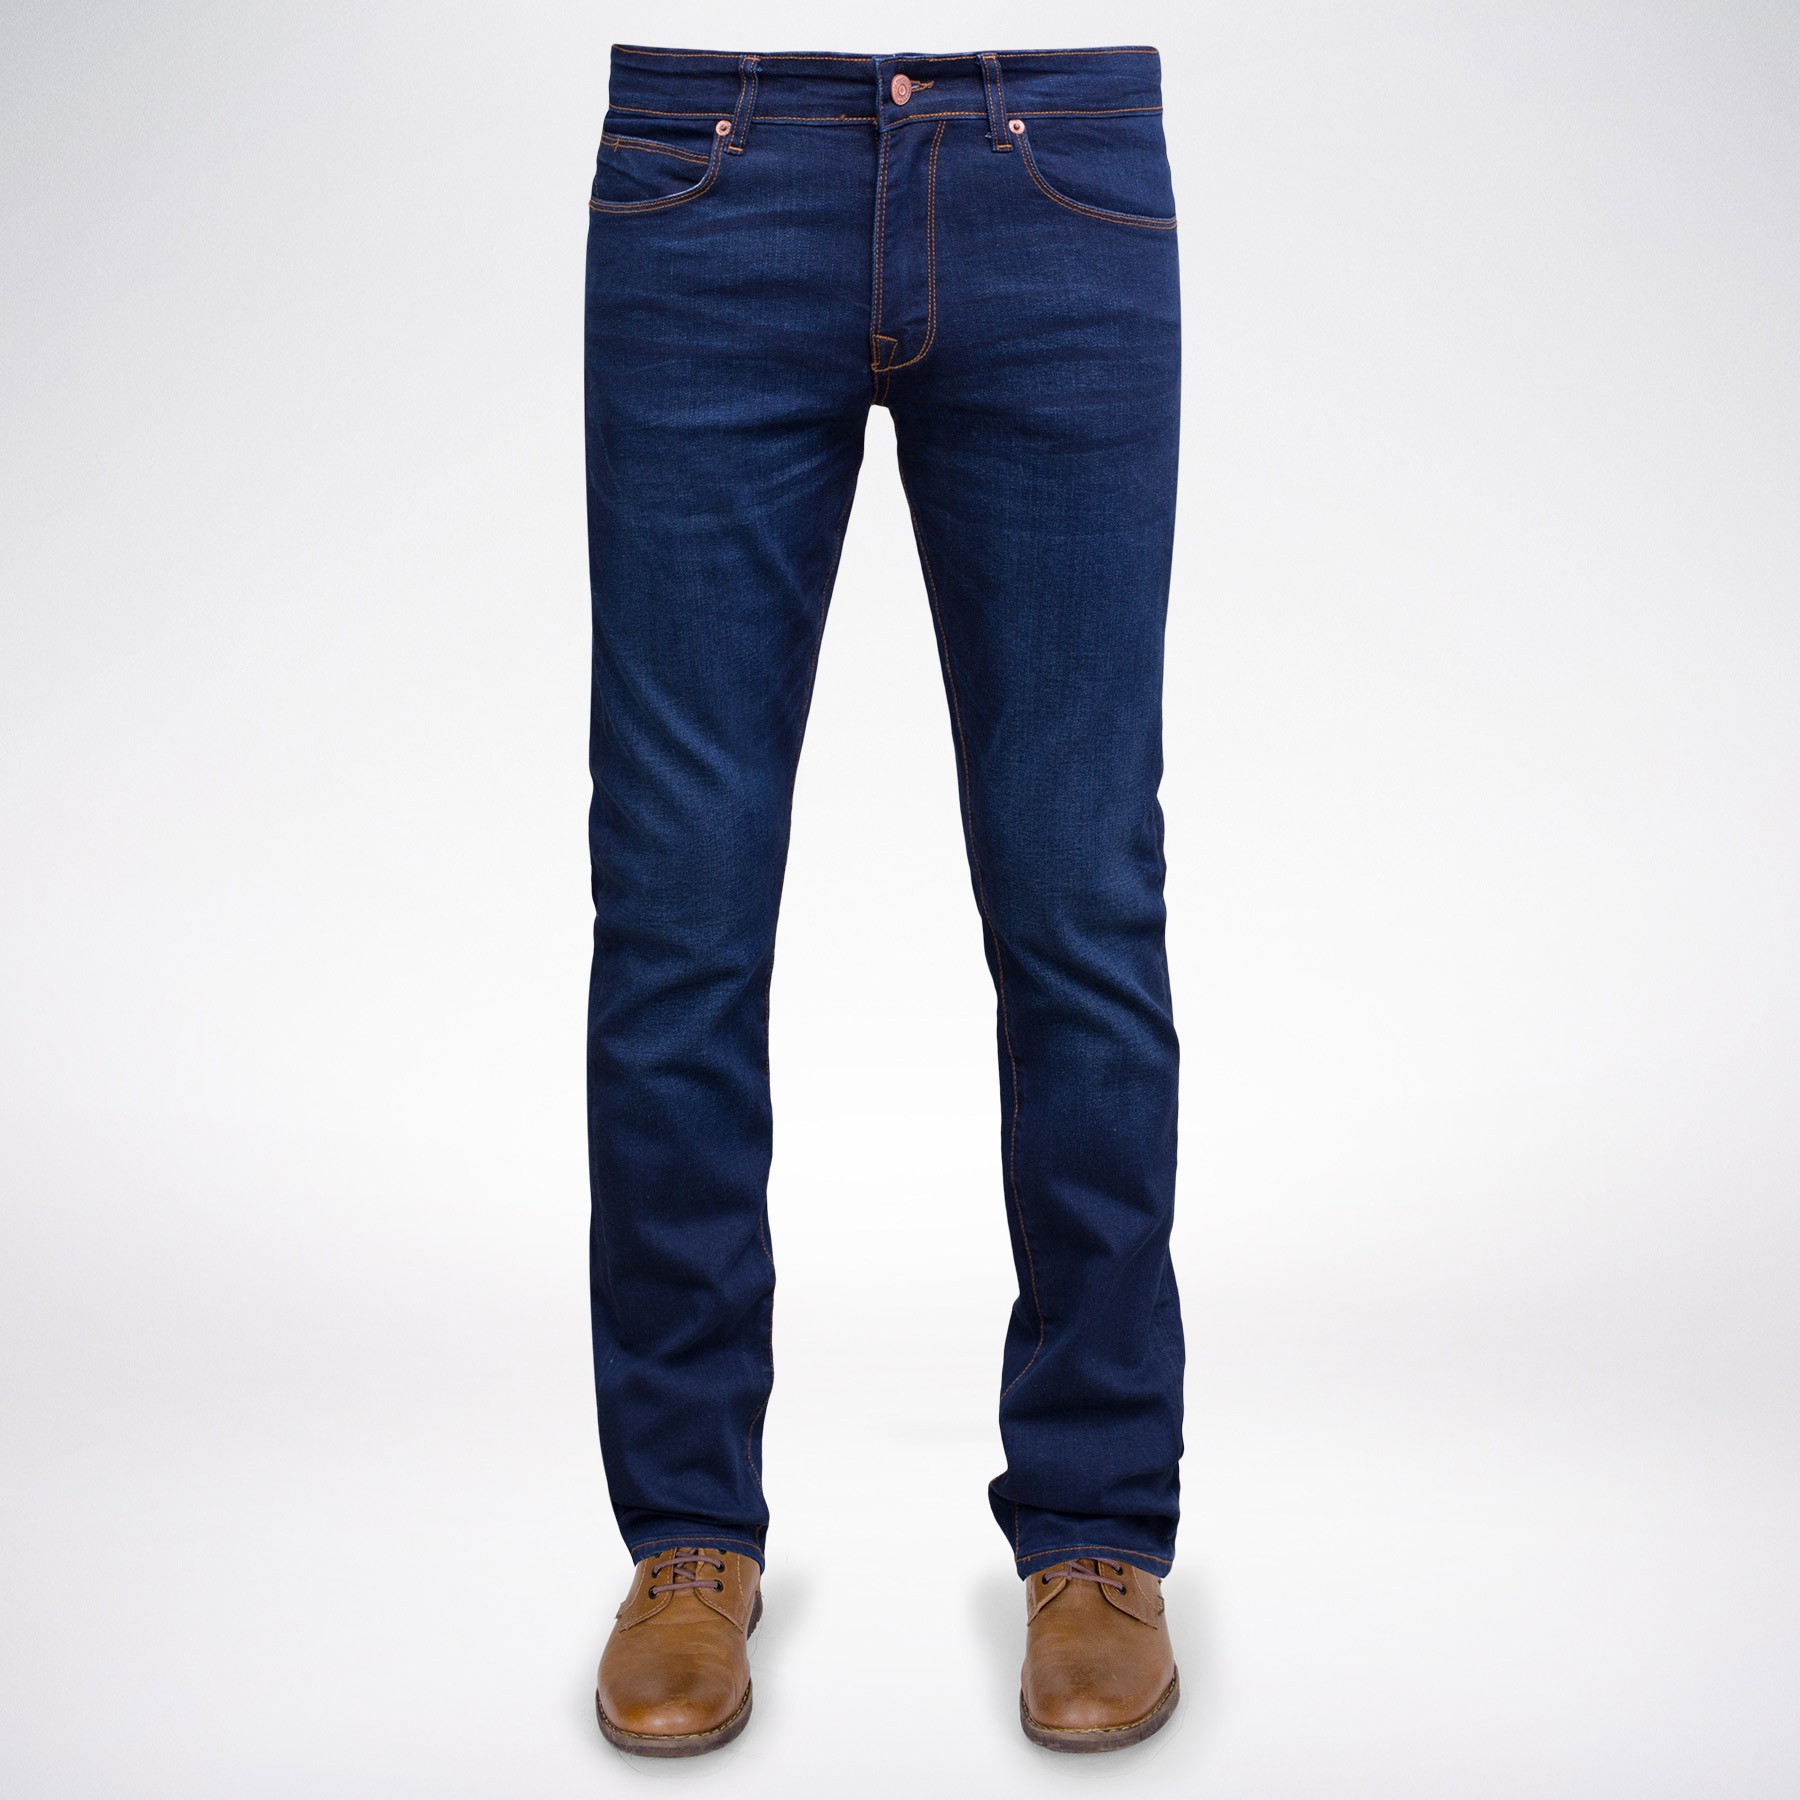 Denim Jeans For Men Online | Straight and Slim Fit Jeans at Uniworth ...